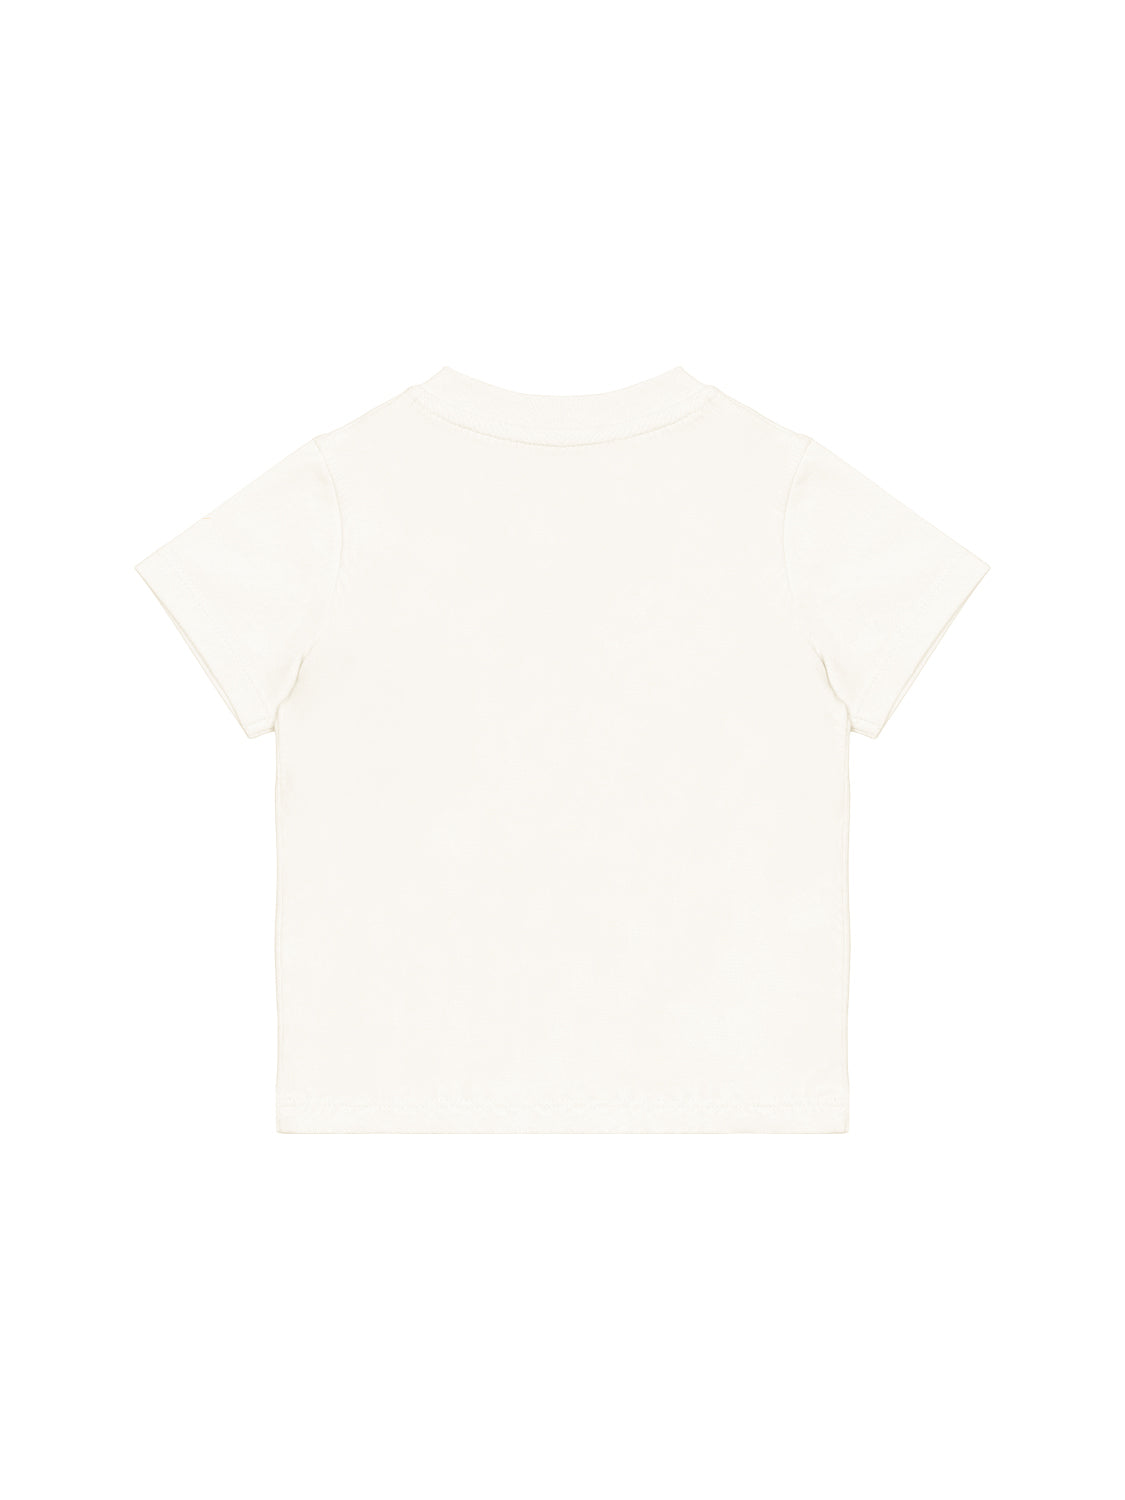 Latzhose und T-Shirt im Set - Creme